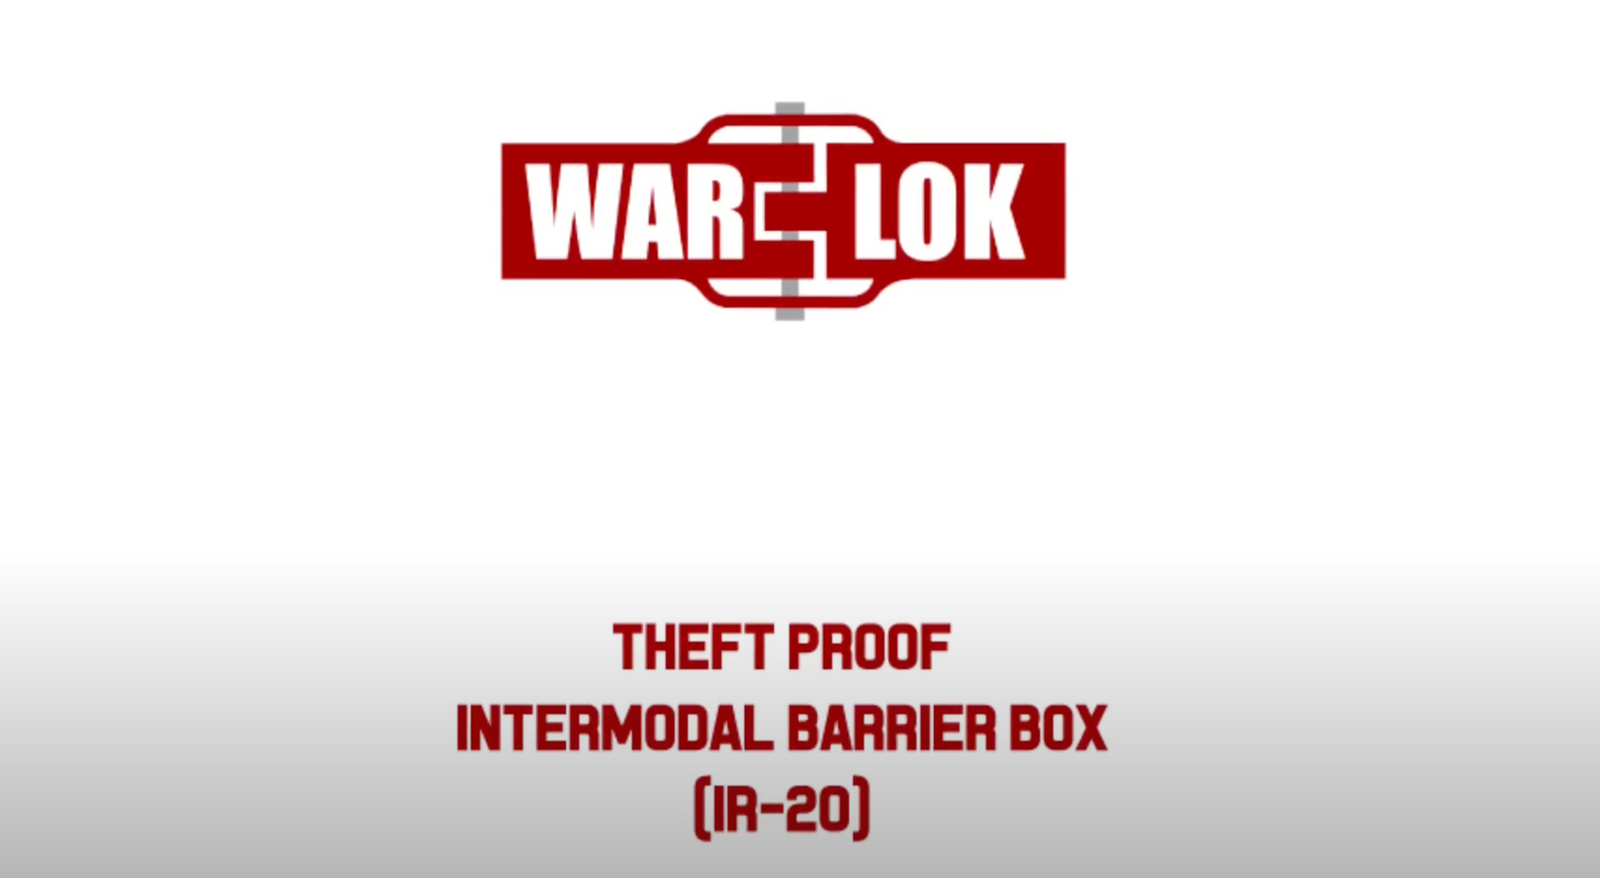 Theft Proof Intermodal Barrier Box Video